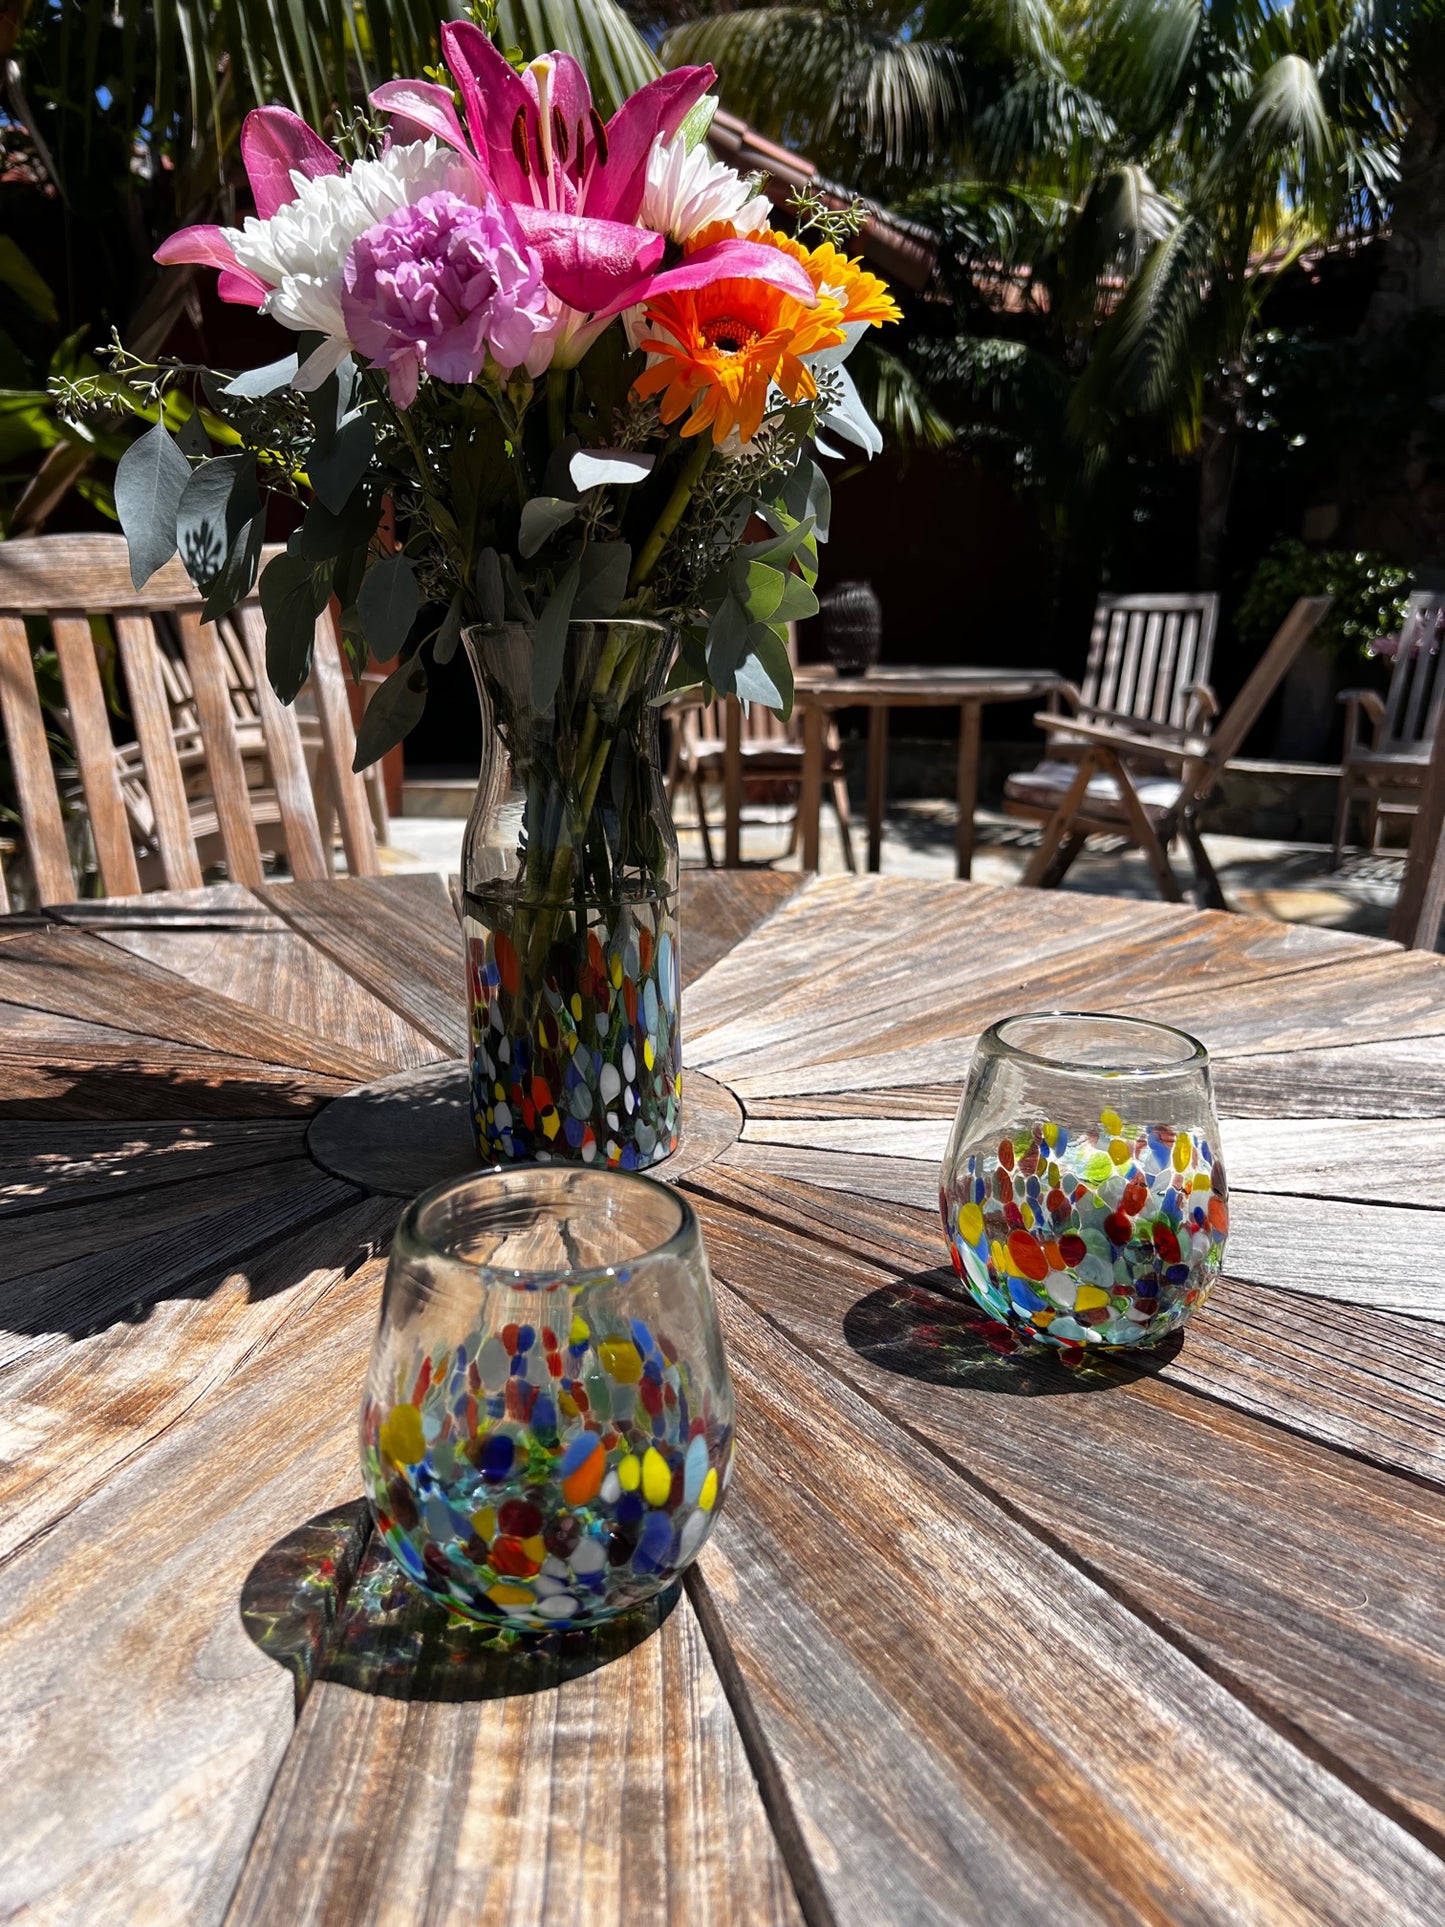 30 oz Hand Blown Glass Luc Pitcher / Vase - Confetti Base